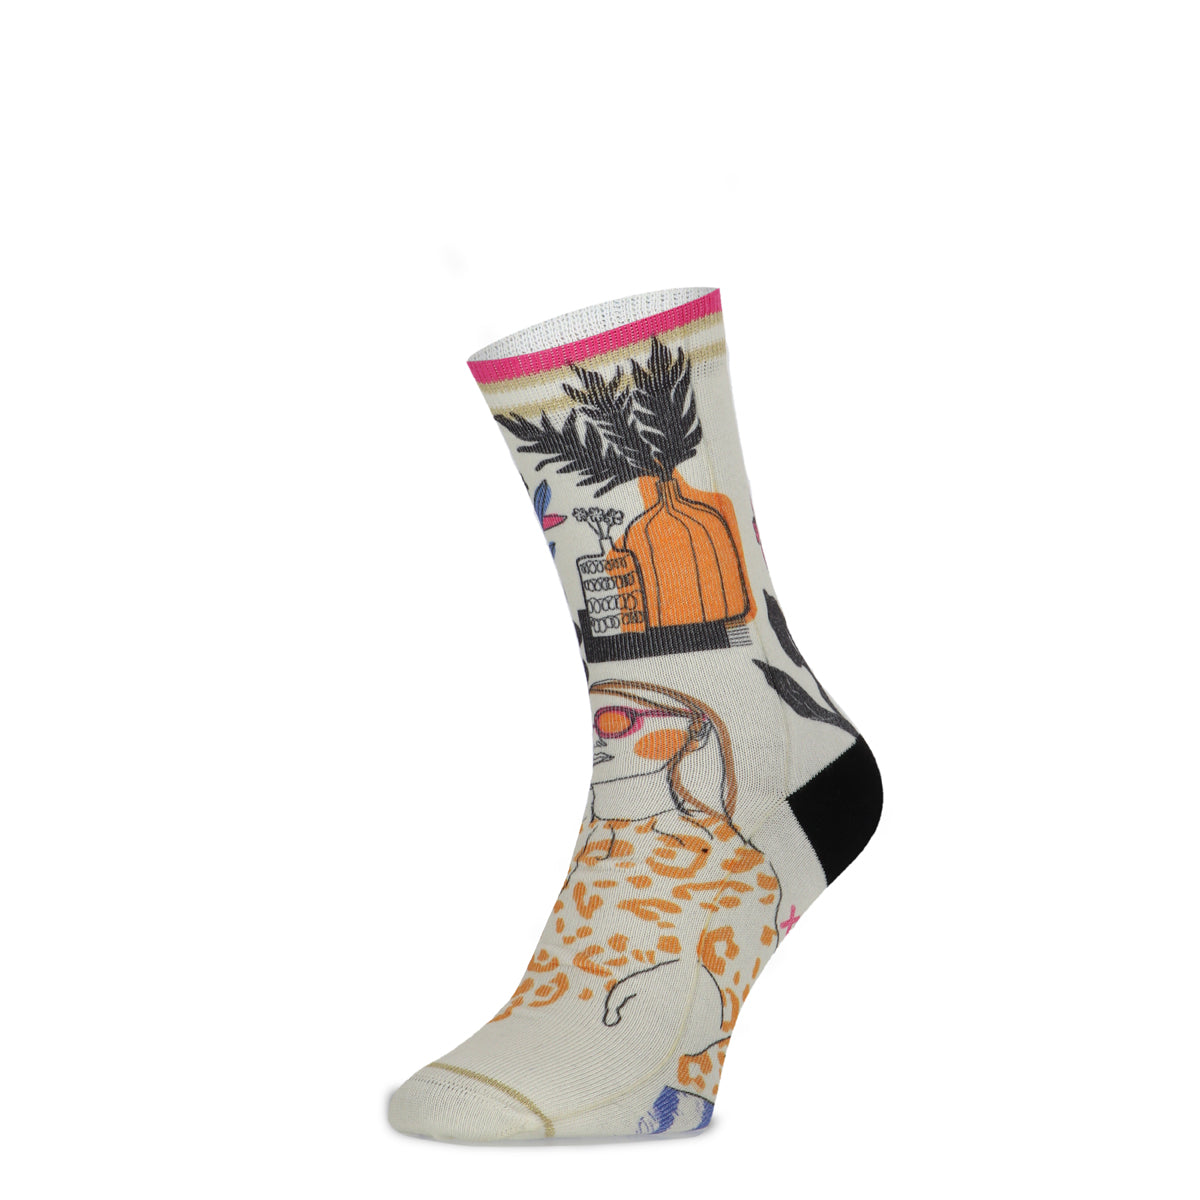 Donatella women's socks